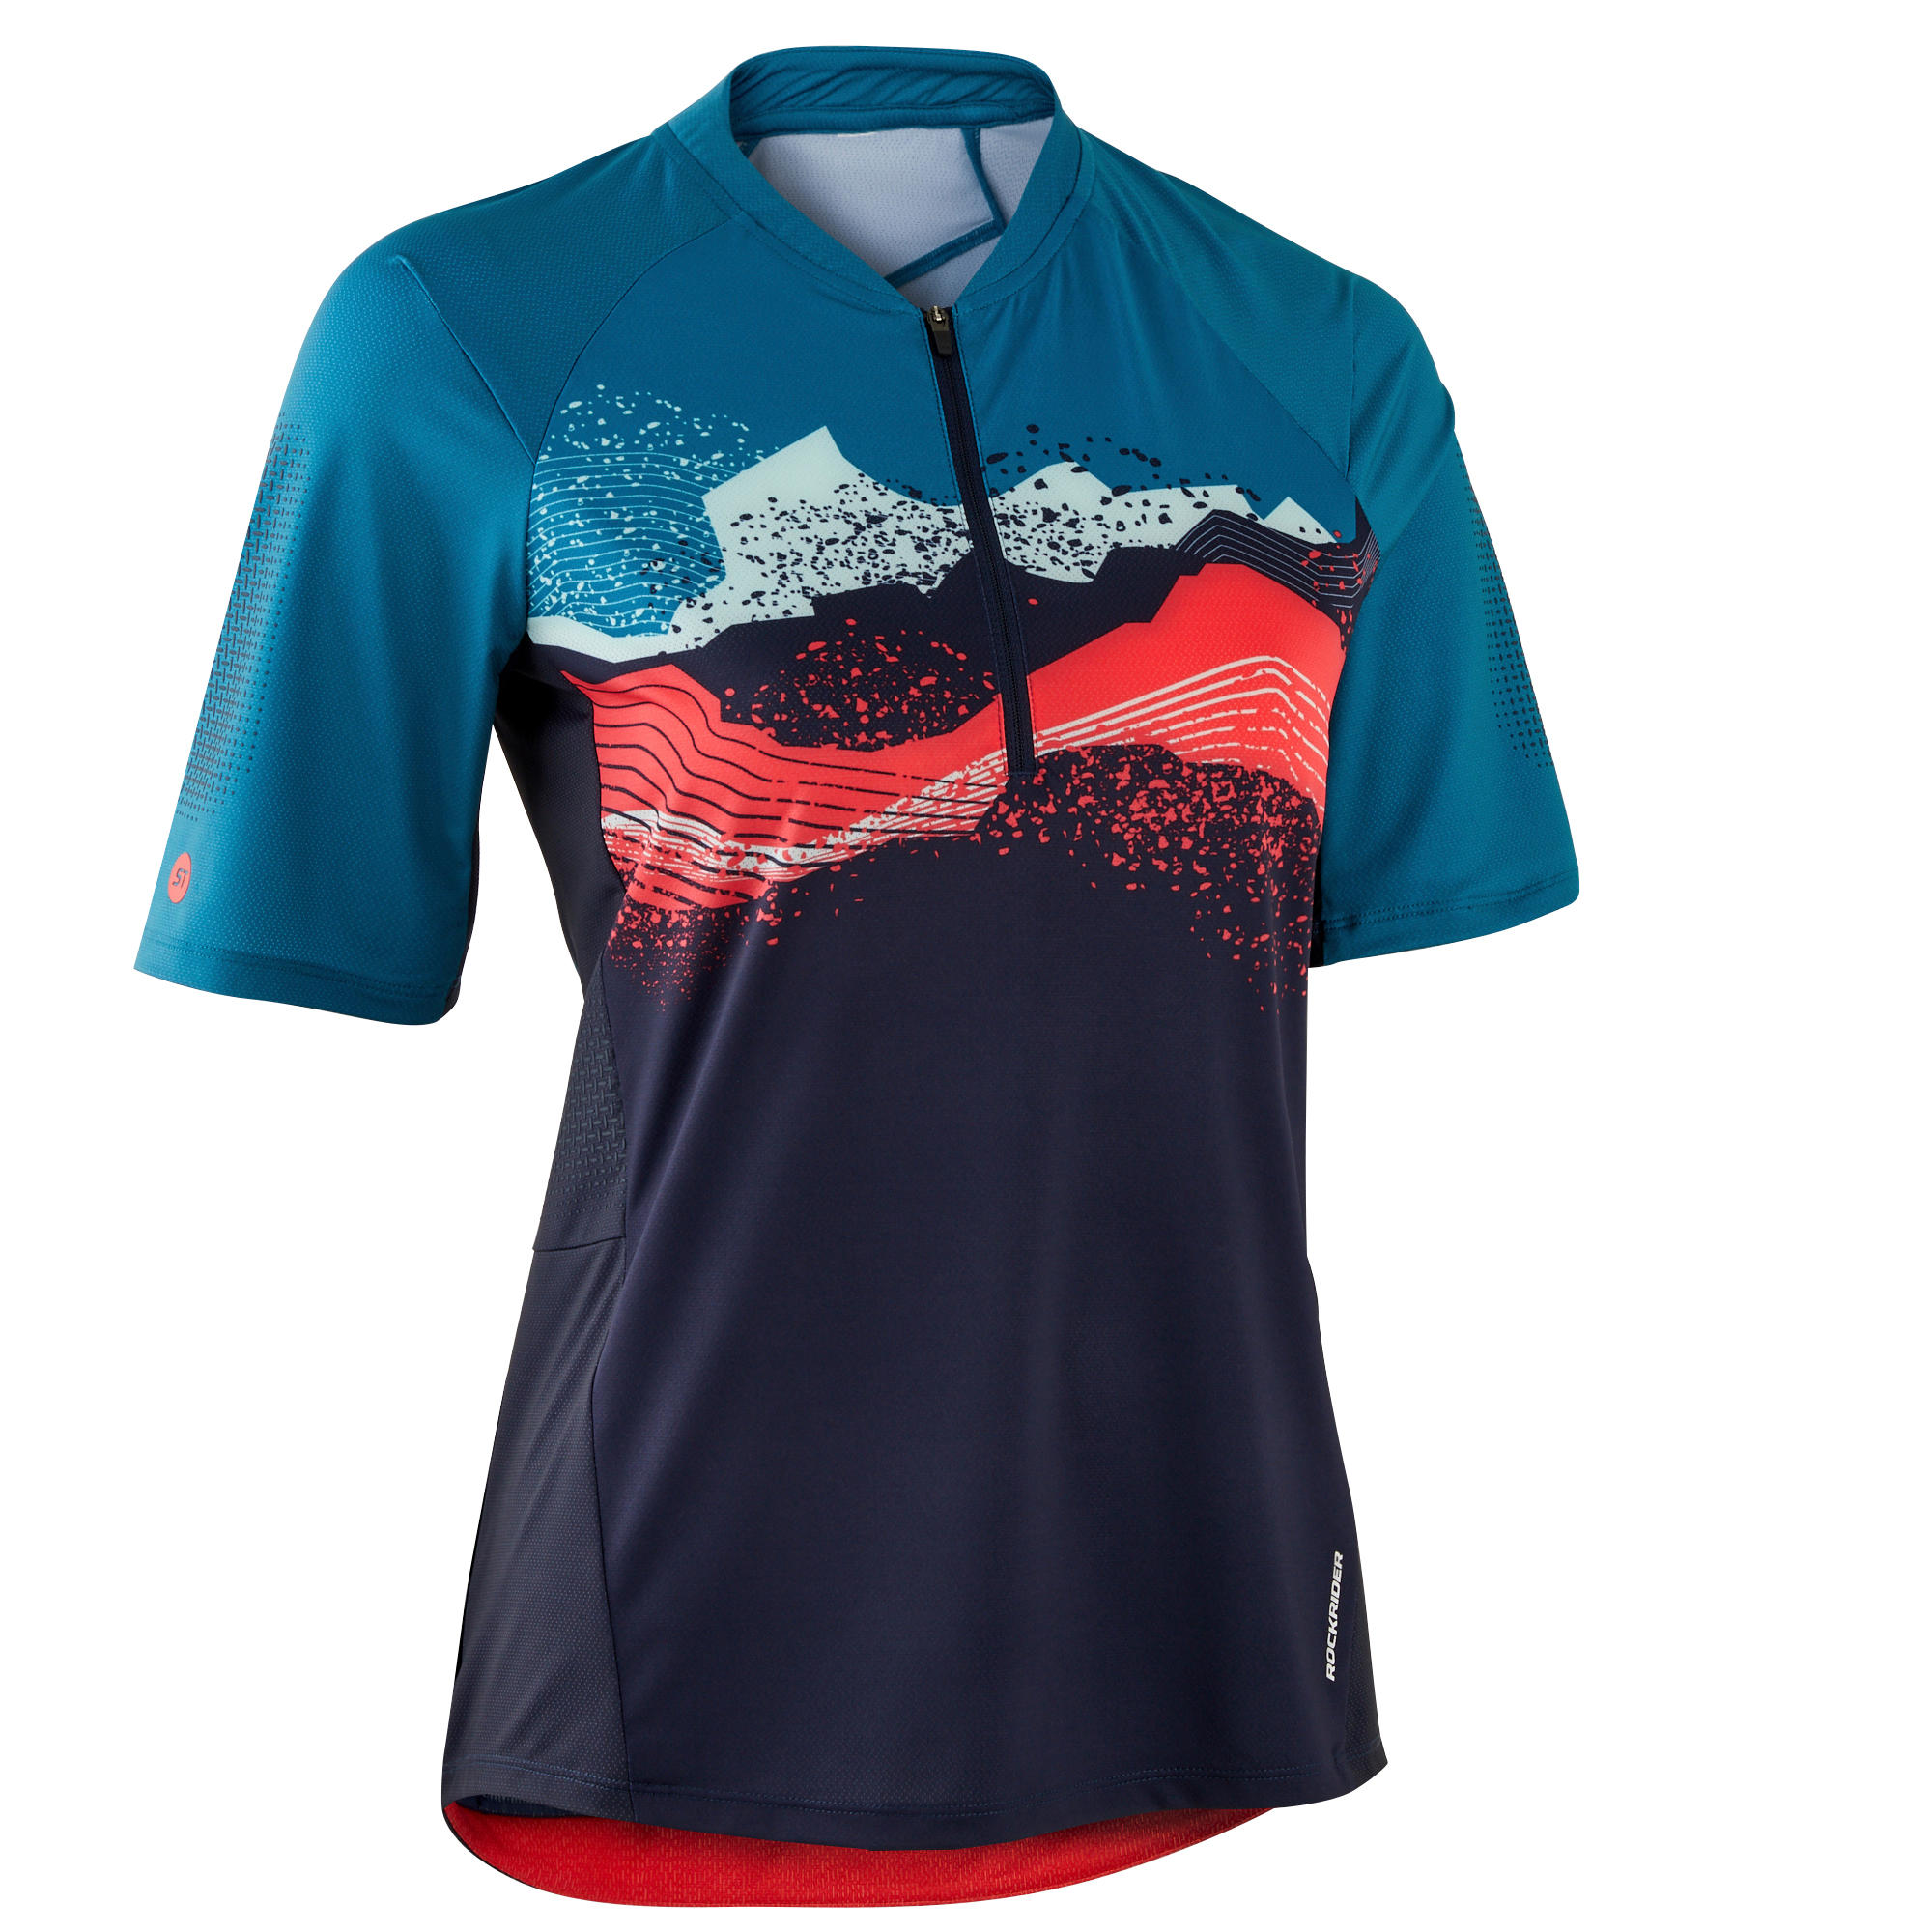 ROCKRIDER Women's Short-Sleeved Mountain Bike Jersey ST 500 - Turquoise/Navy